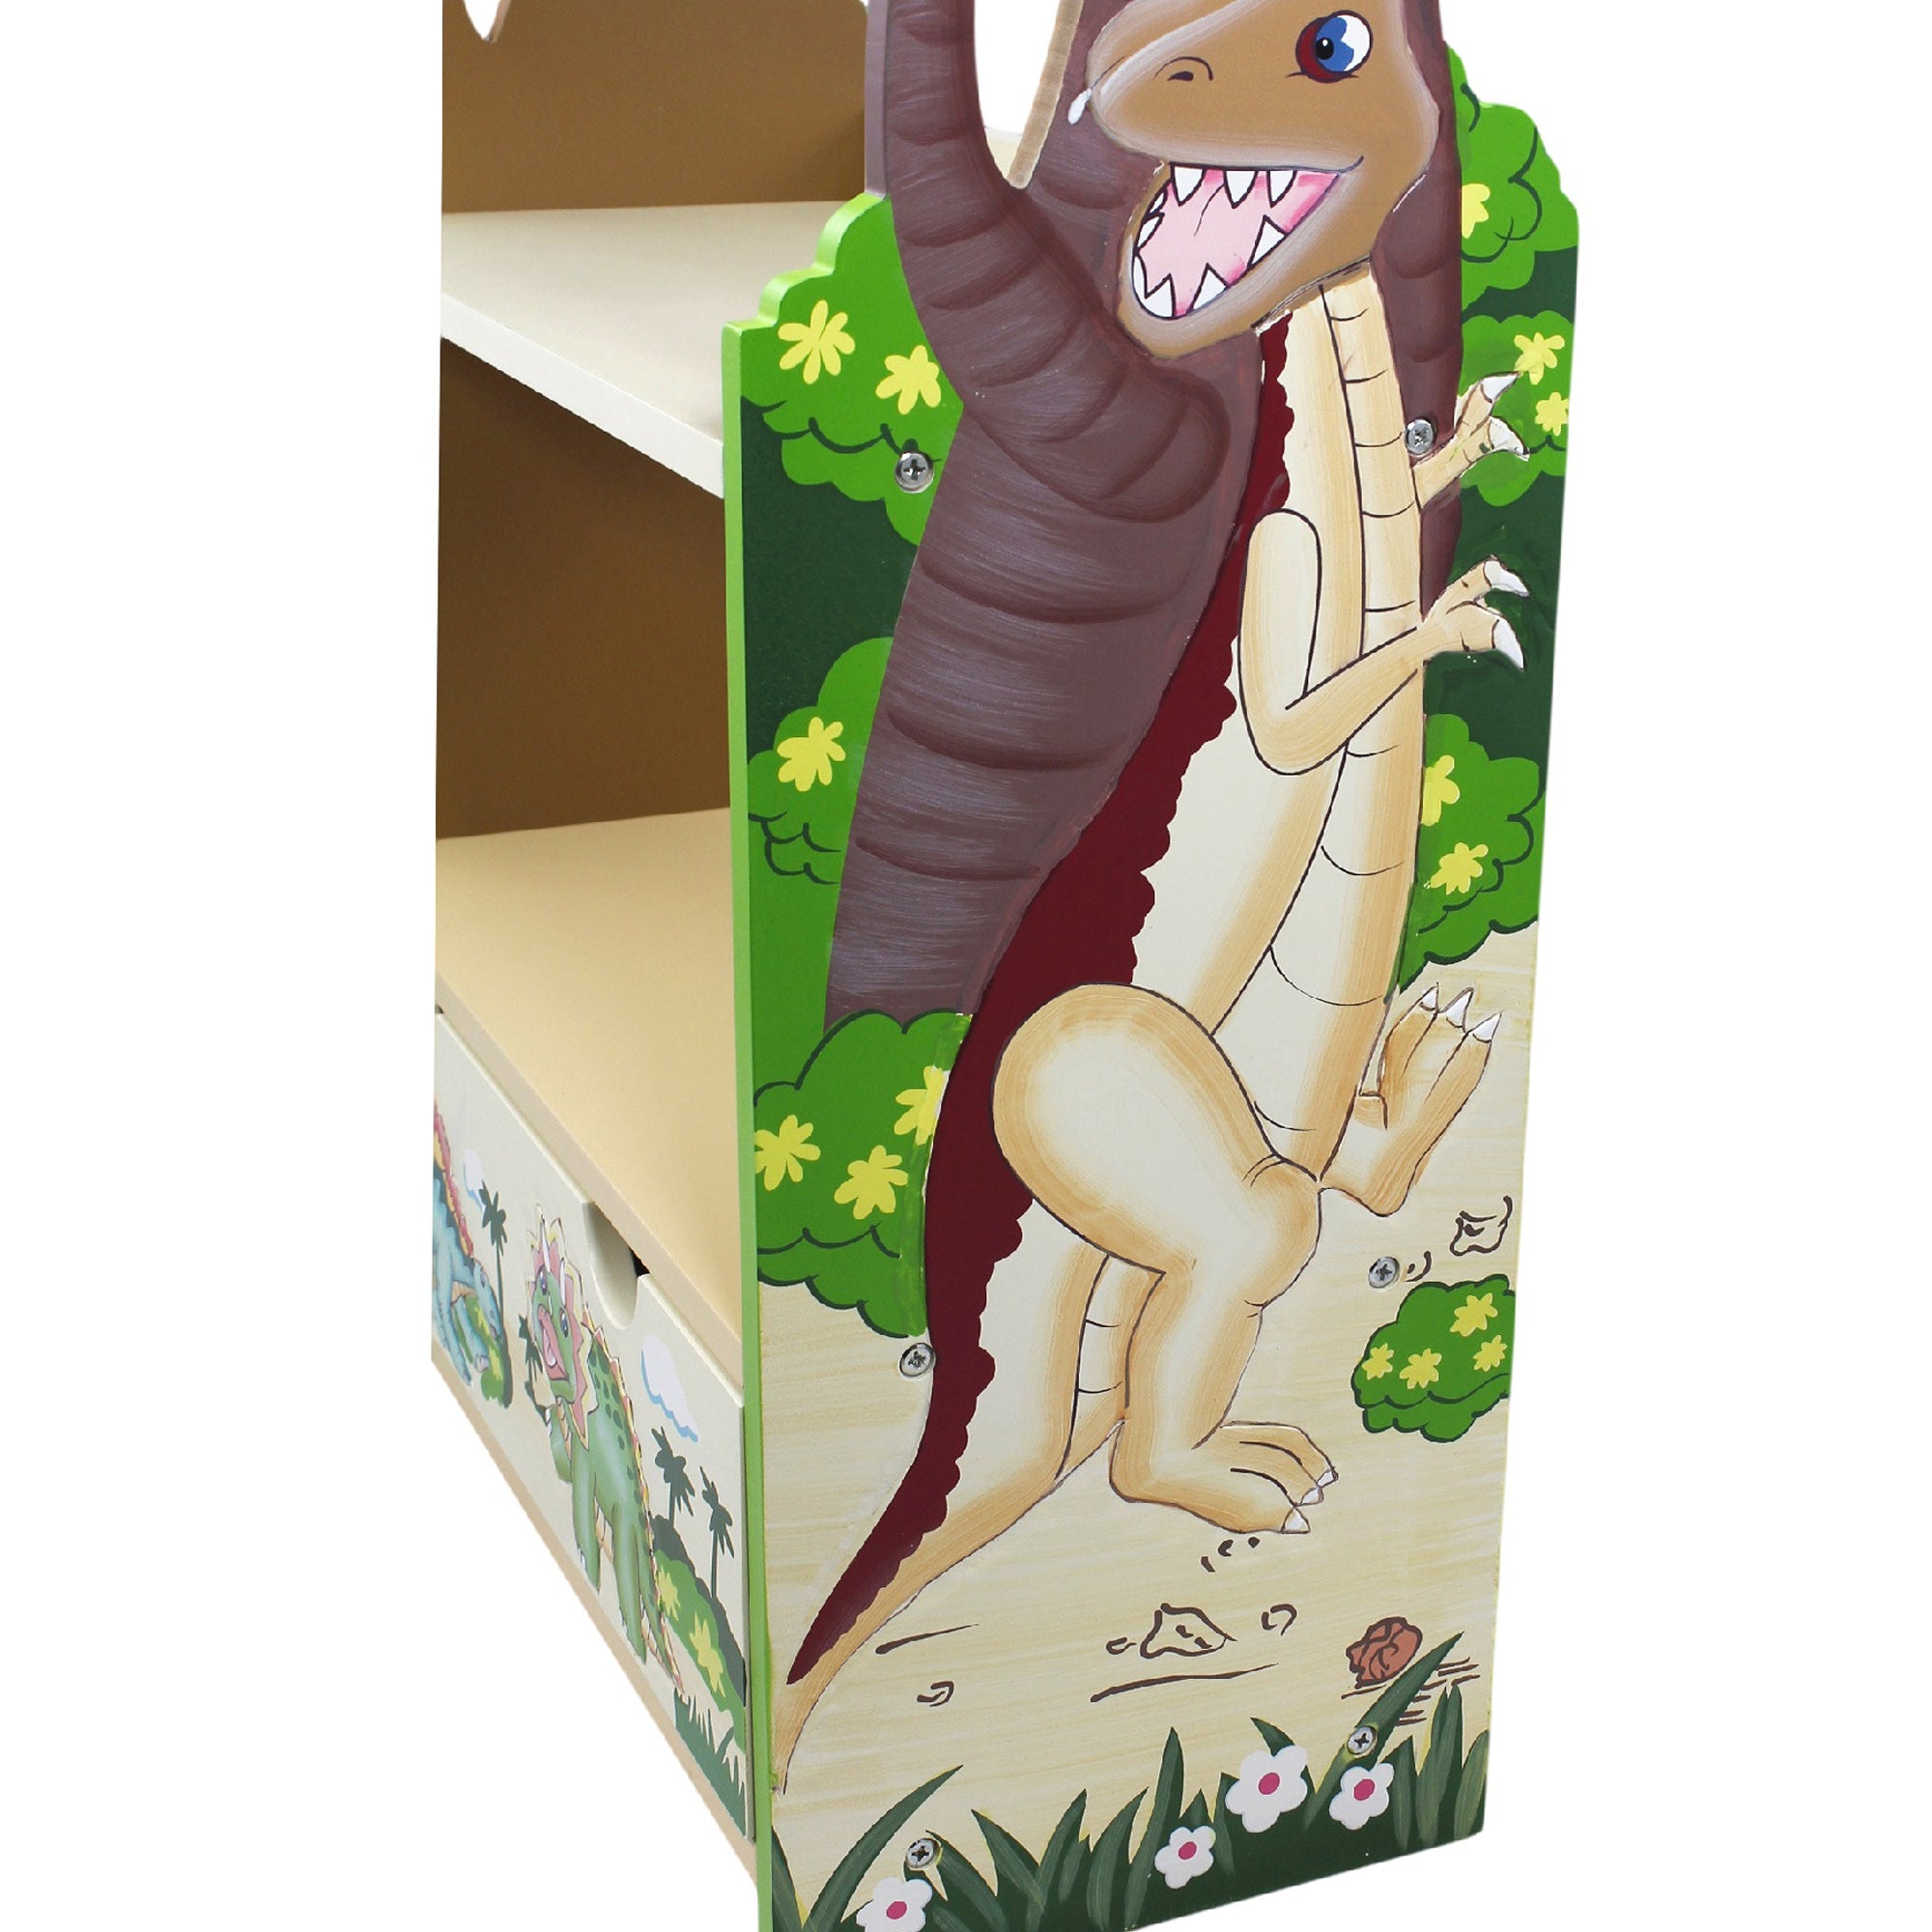 Fantasy Fields Dinosaur Kingdom Bookshelf with Storage Drawer, Multicolor